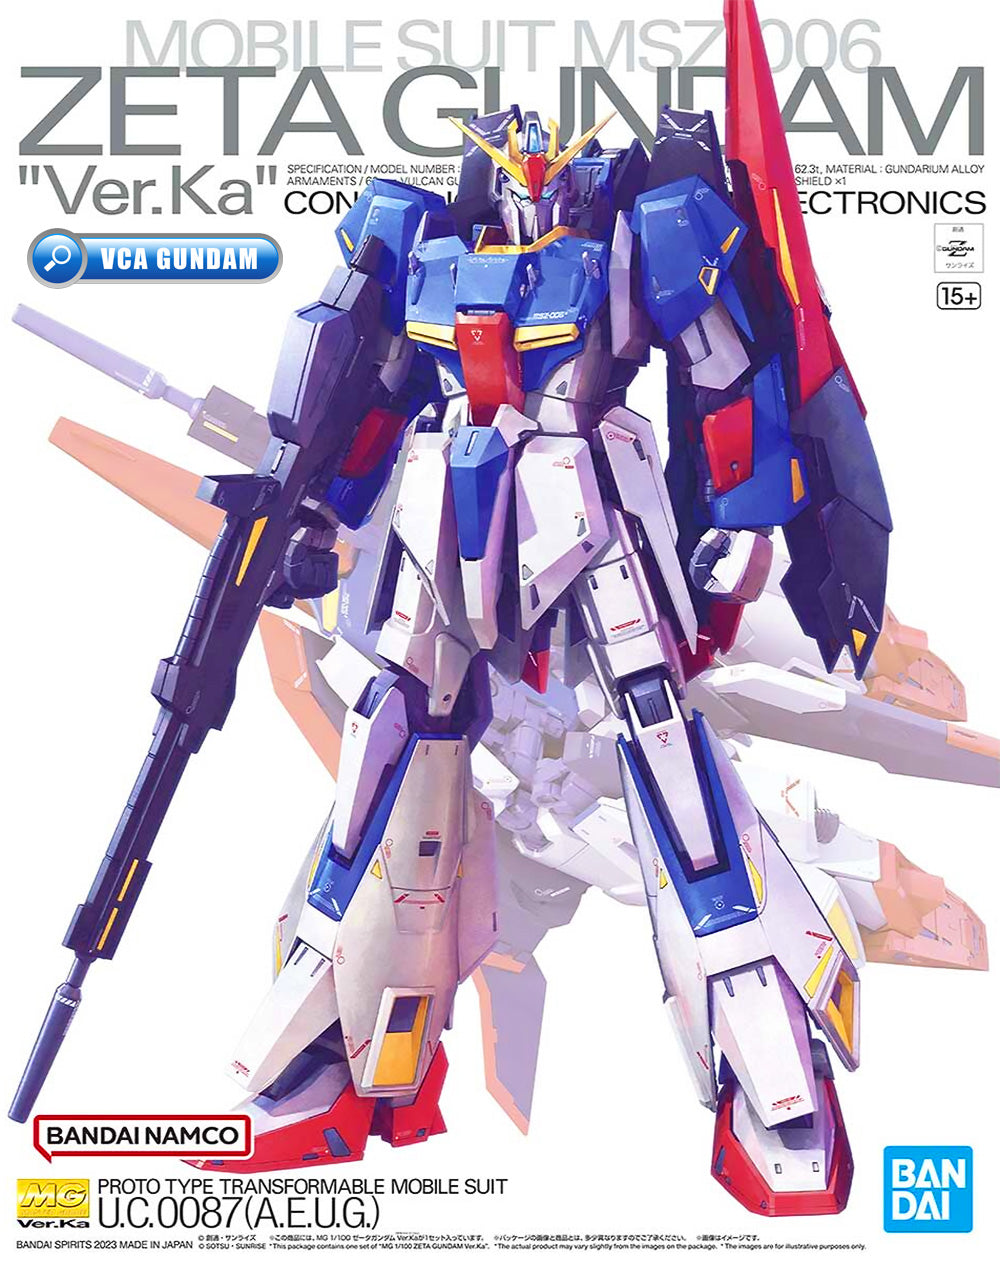 Bandai Gunpla Master Grade 1/100 MG Zeta Gundam Ver Ka Plastic Model Action Toy Kit VCA Singapore